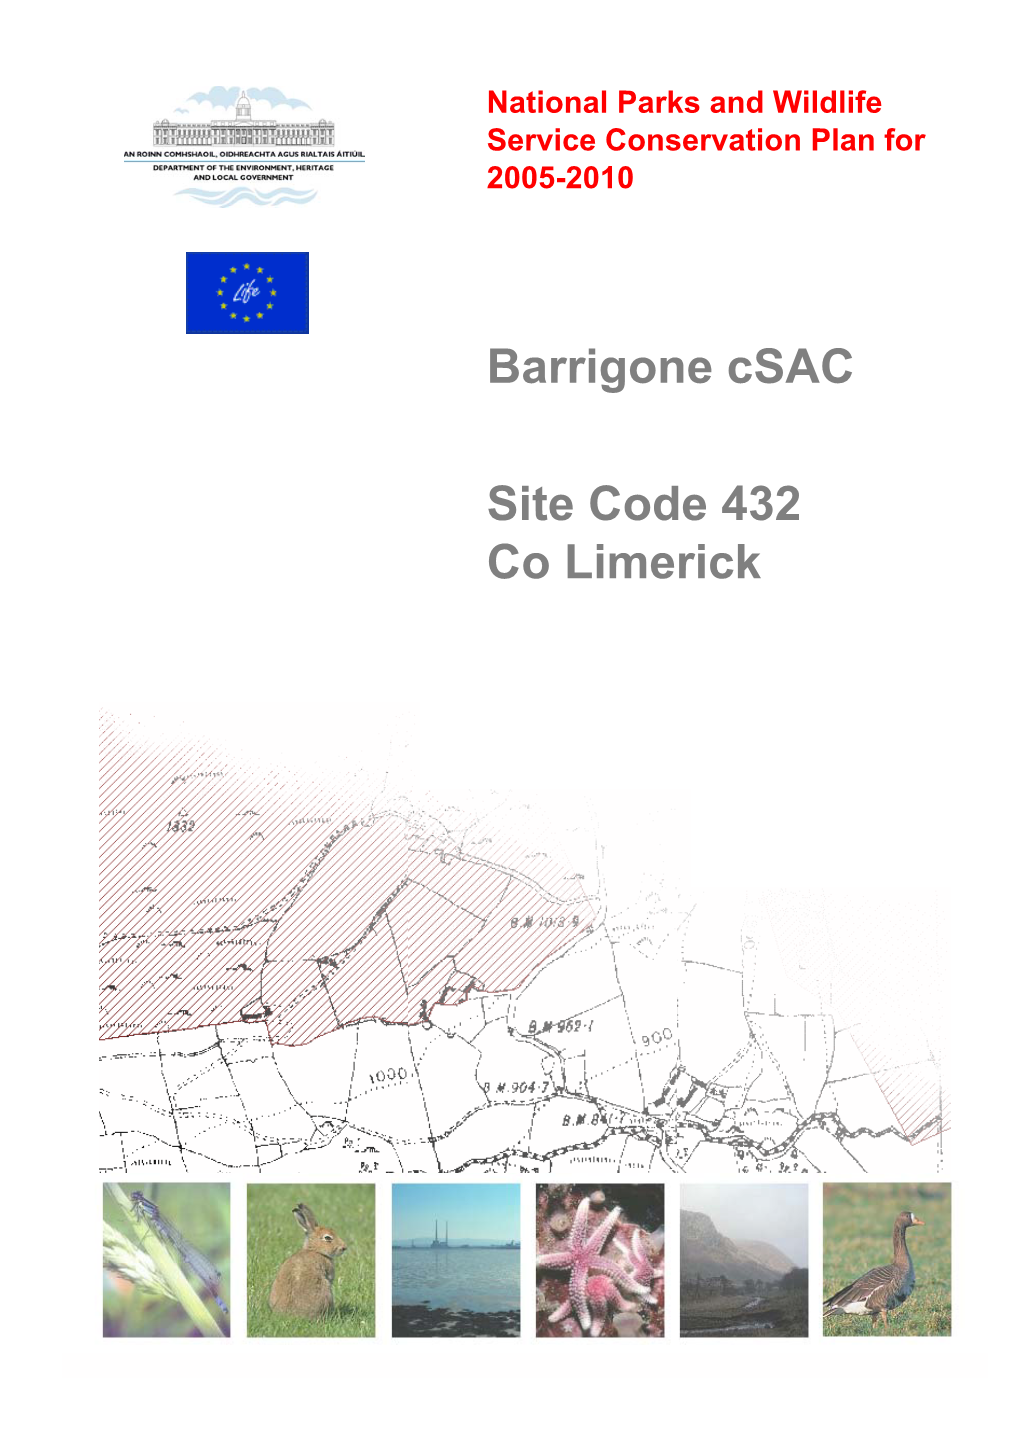 Barrigone Csac Site Code 432 Co Limerick